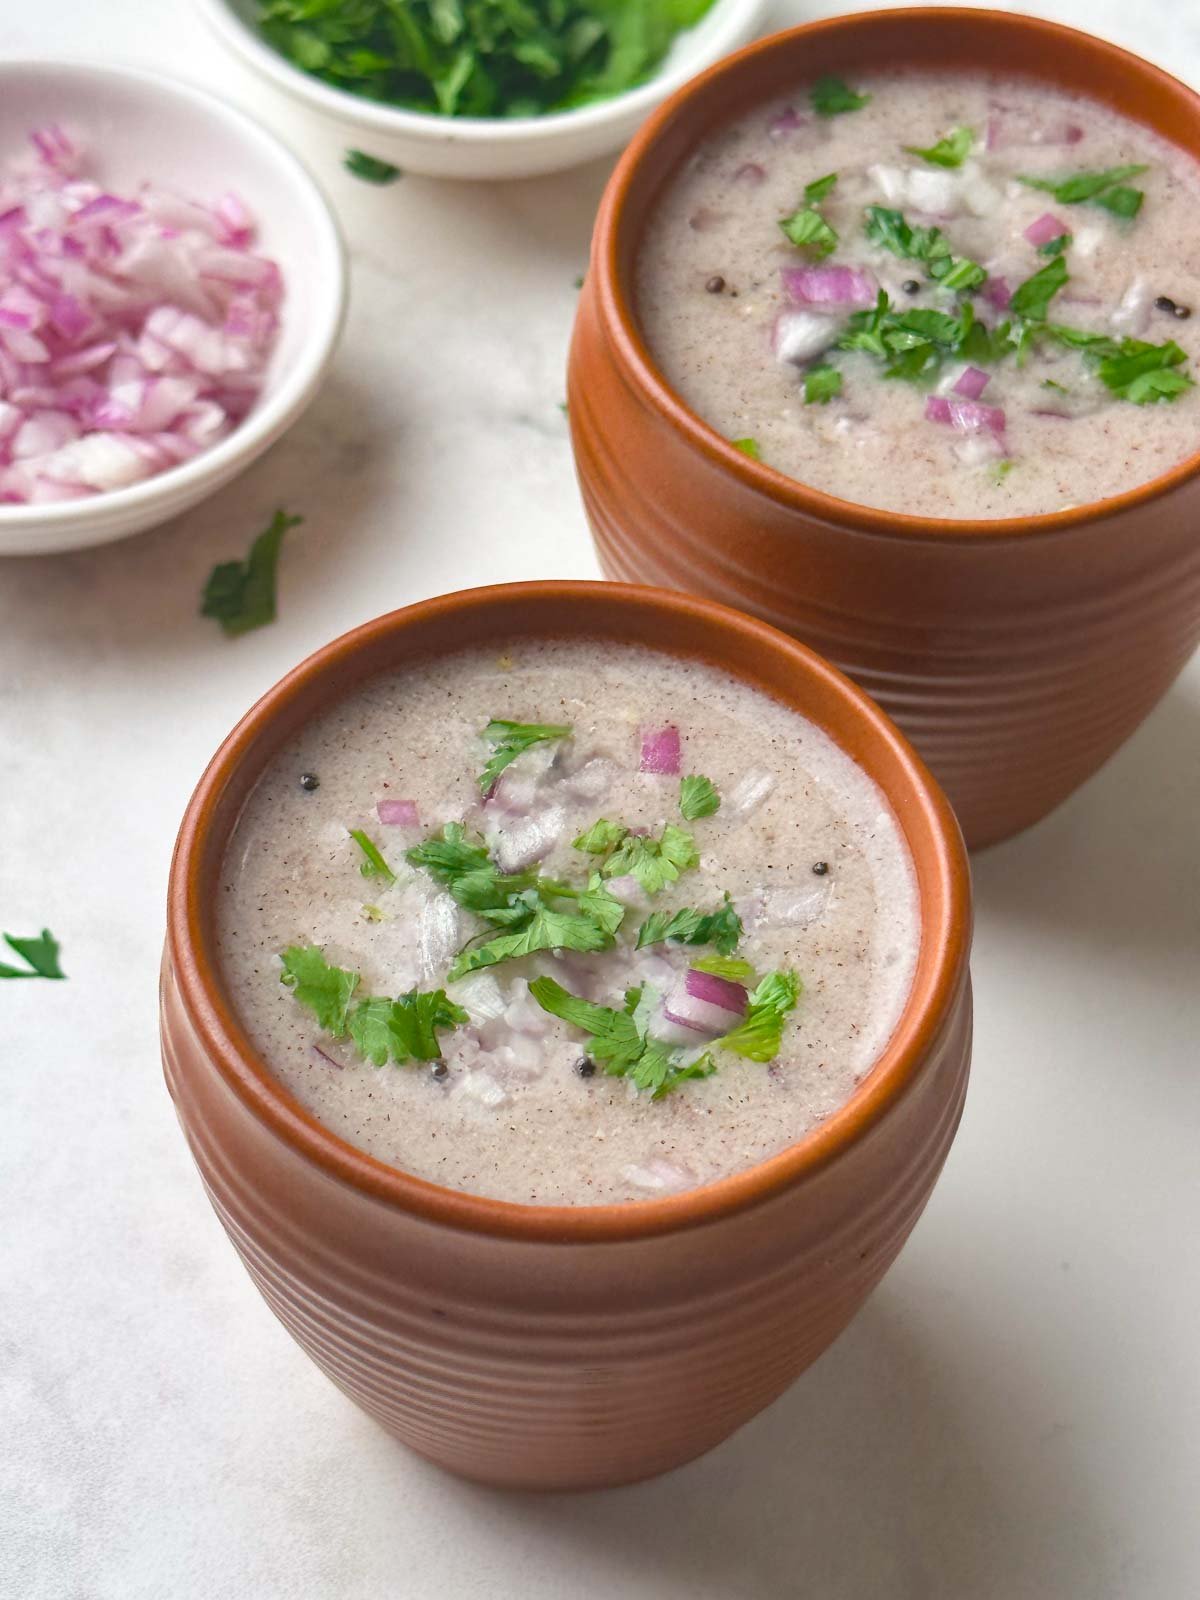 ragi ambli (ragi ganji) served in bowls with coriander and onion on the side